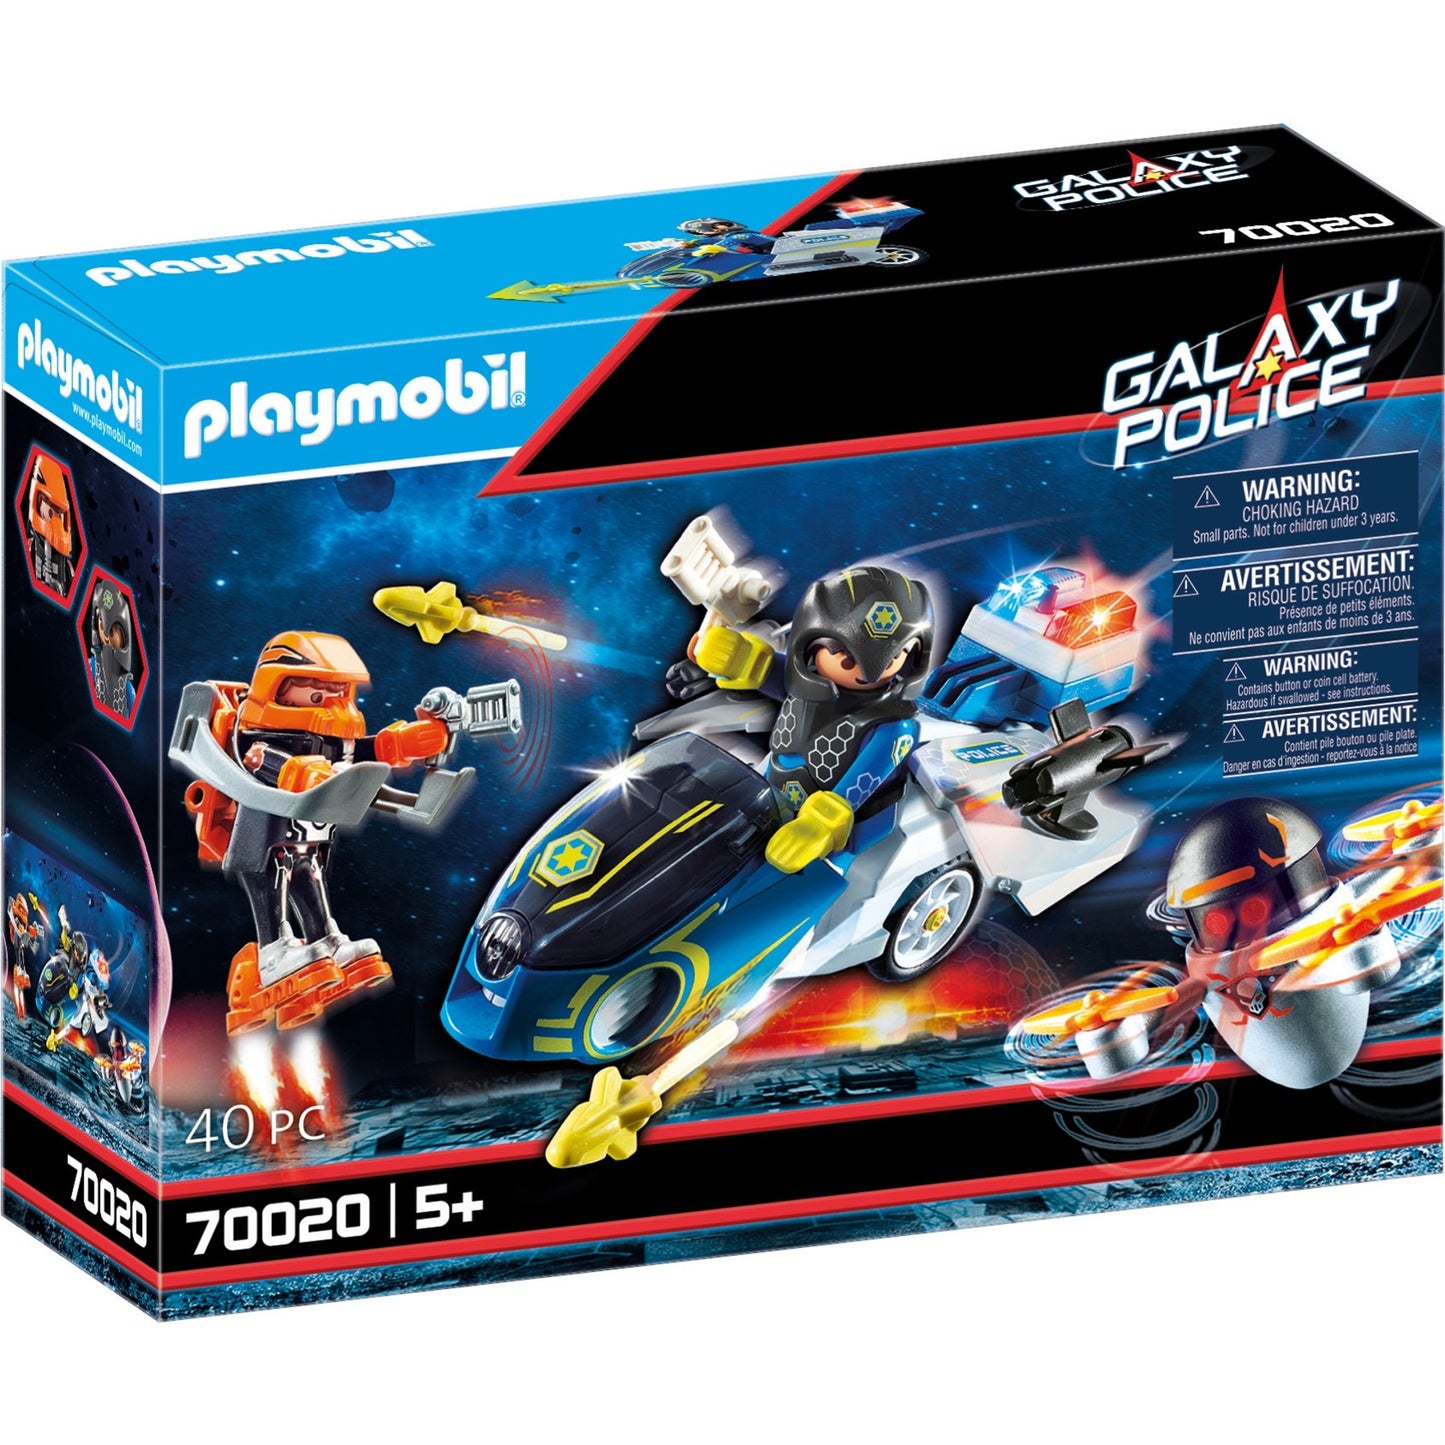 PLAYMOBIL Galaxy Police Galaxy politiemotorfiets